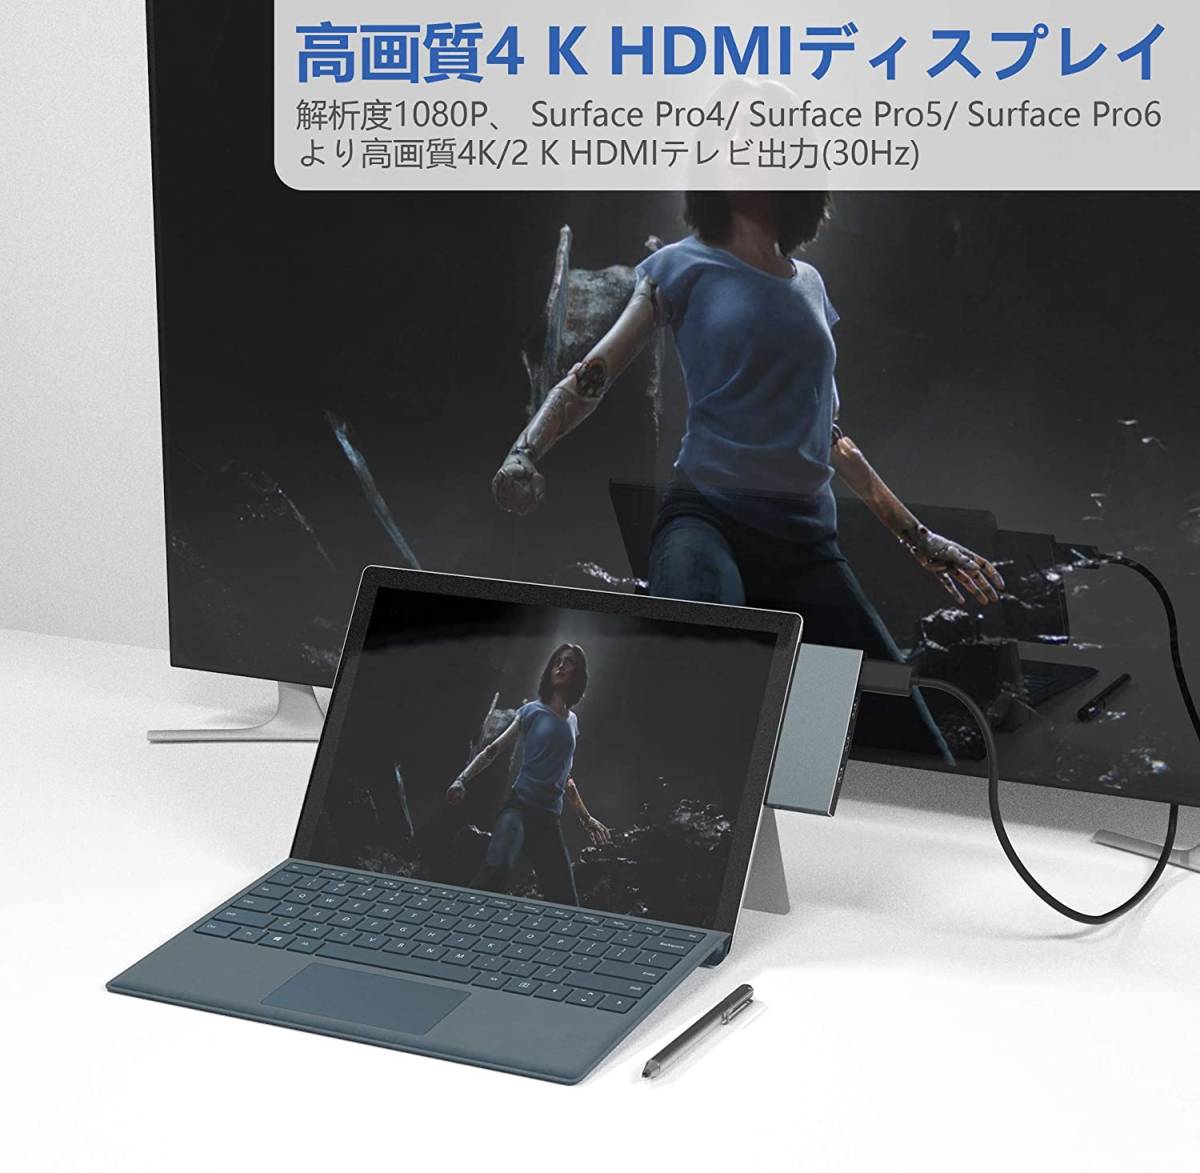 Microsoft Surface Pro 6 / Pro 5 / Pro 4 専用 USB 3.0 ハブ